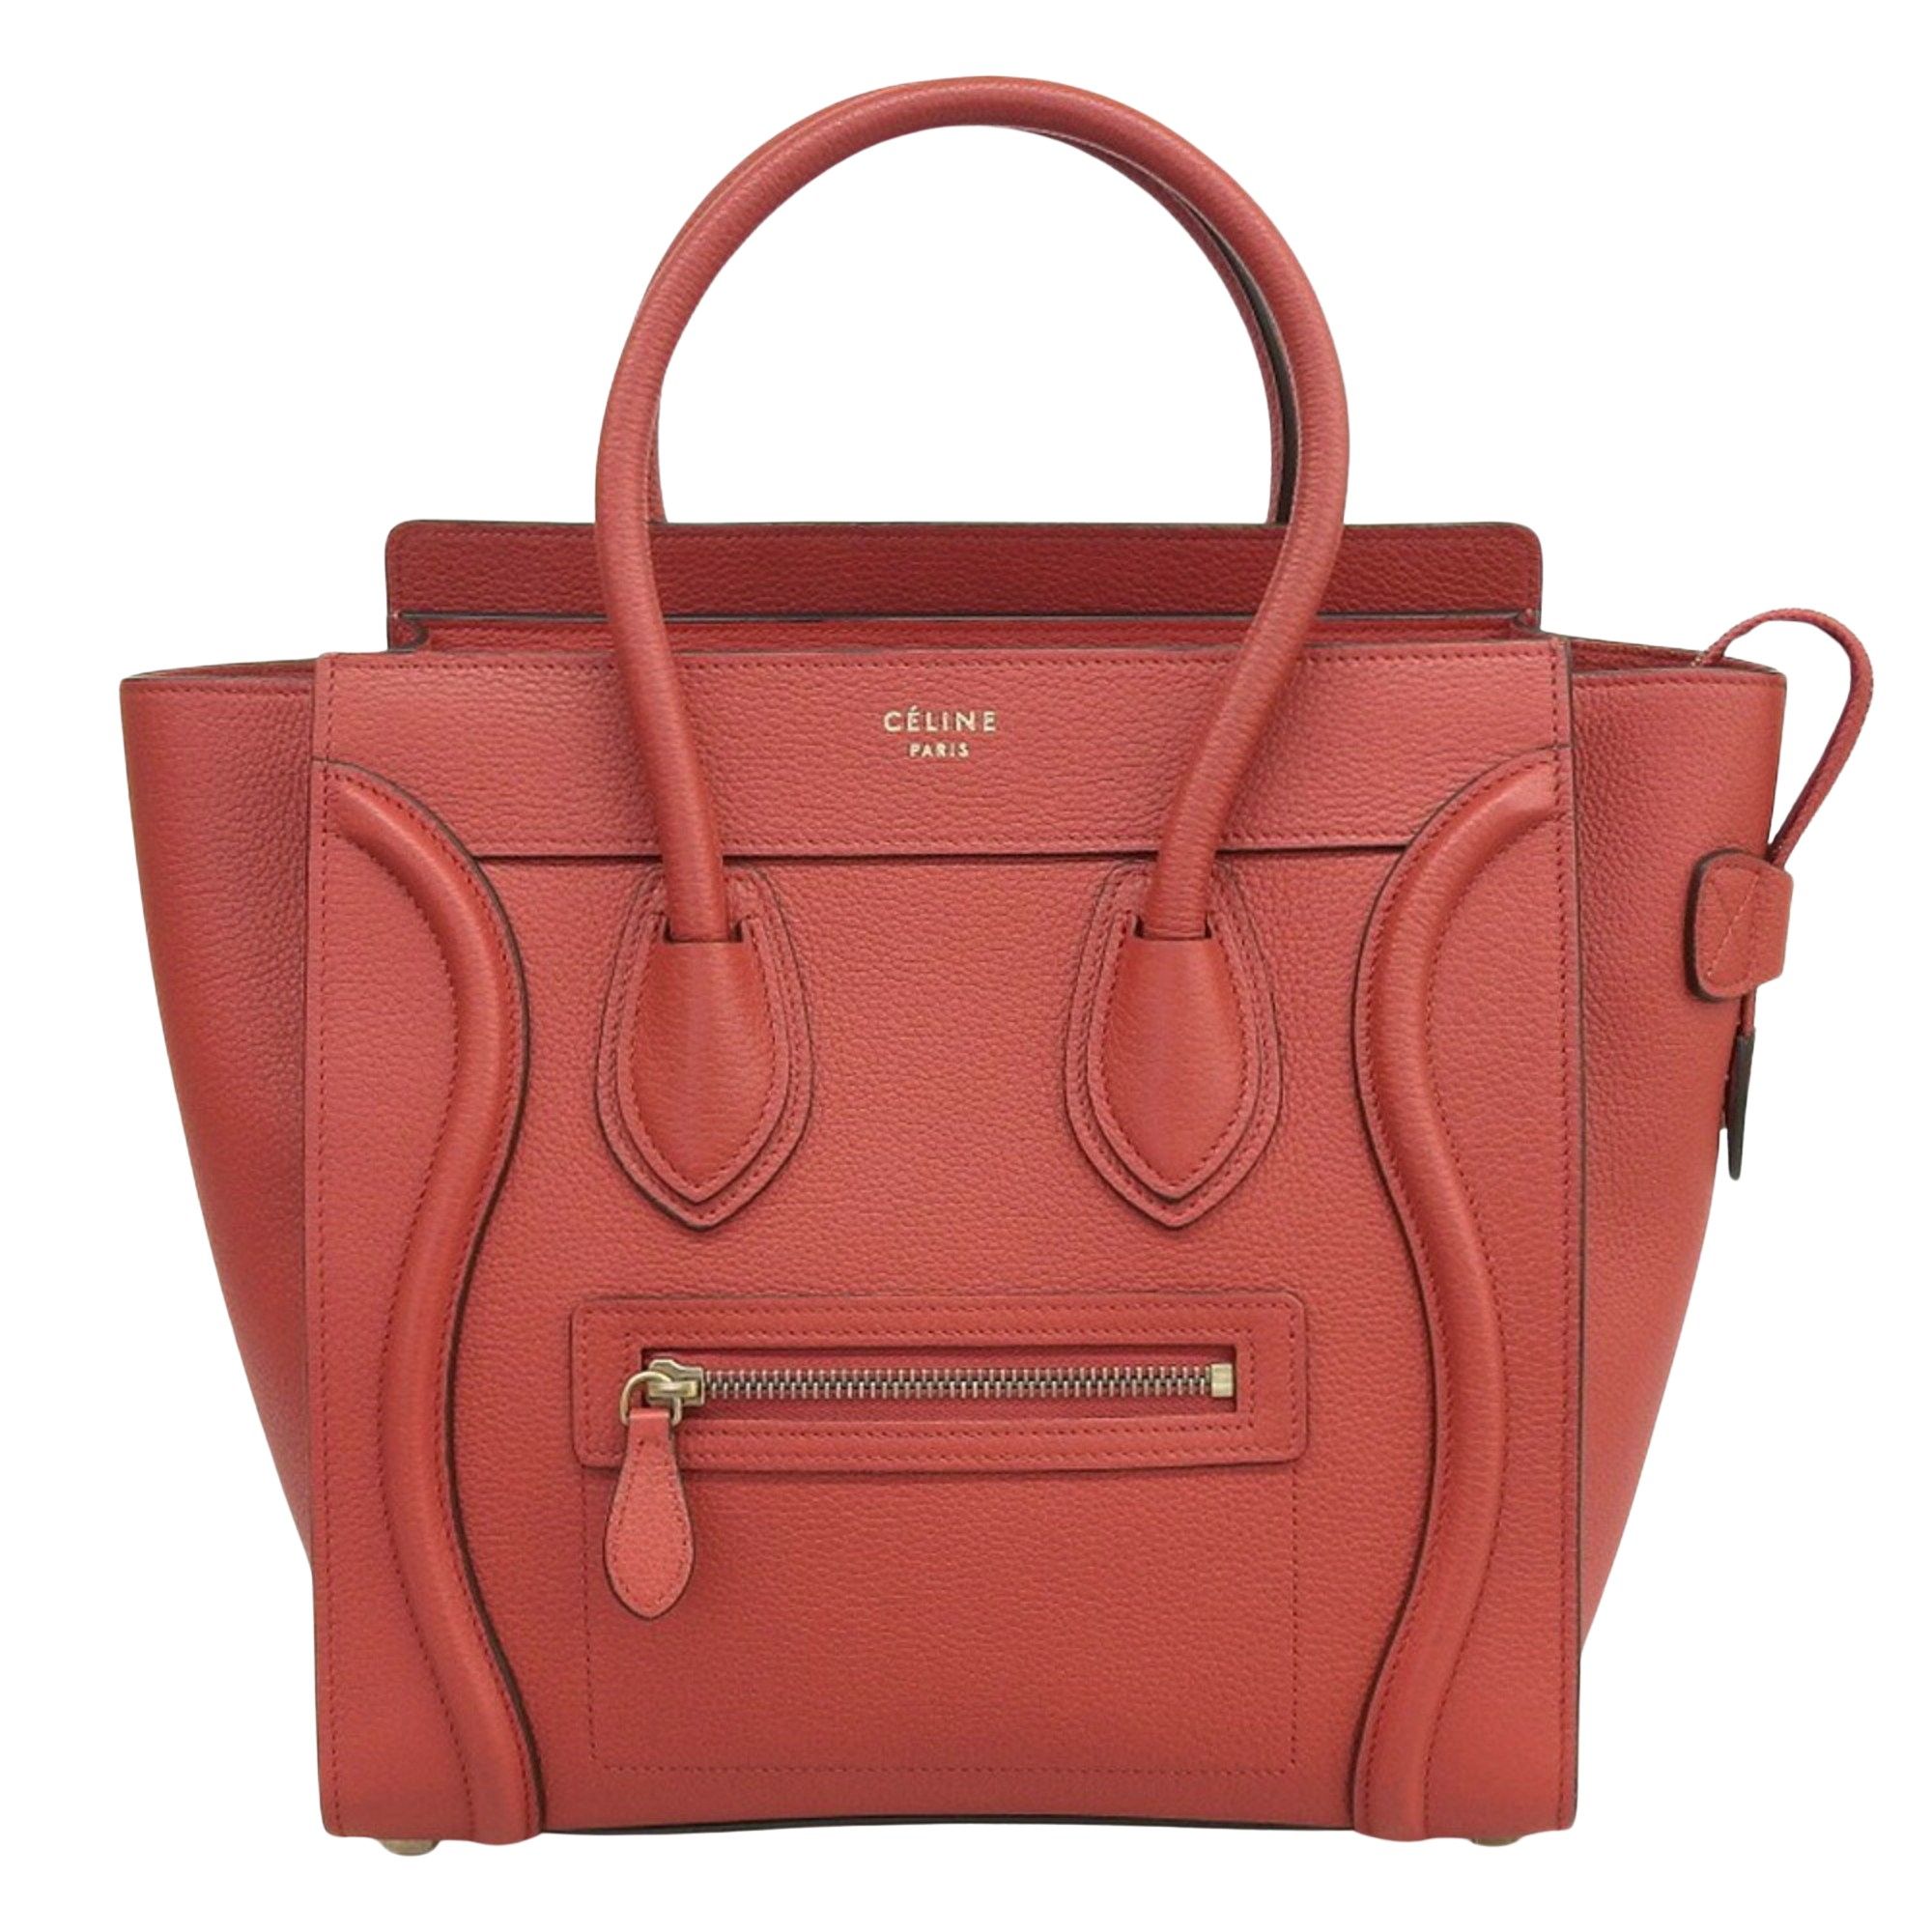 image of Celine Céline Luggage Handbag in Red, Women's